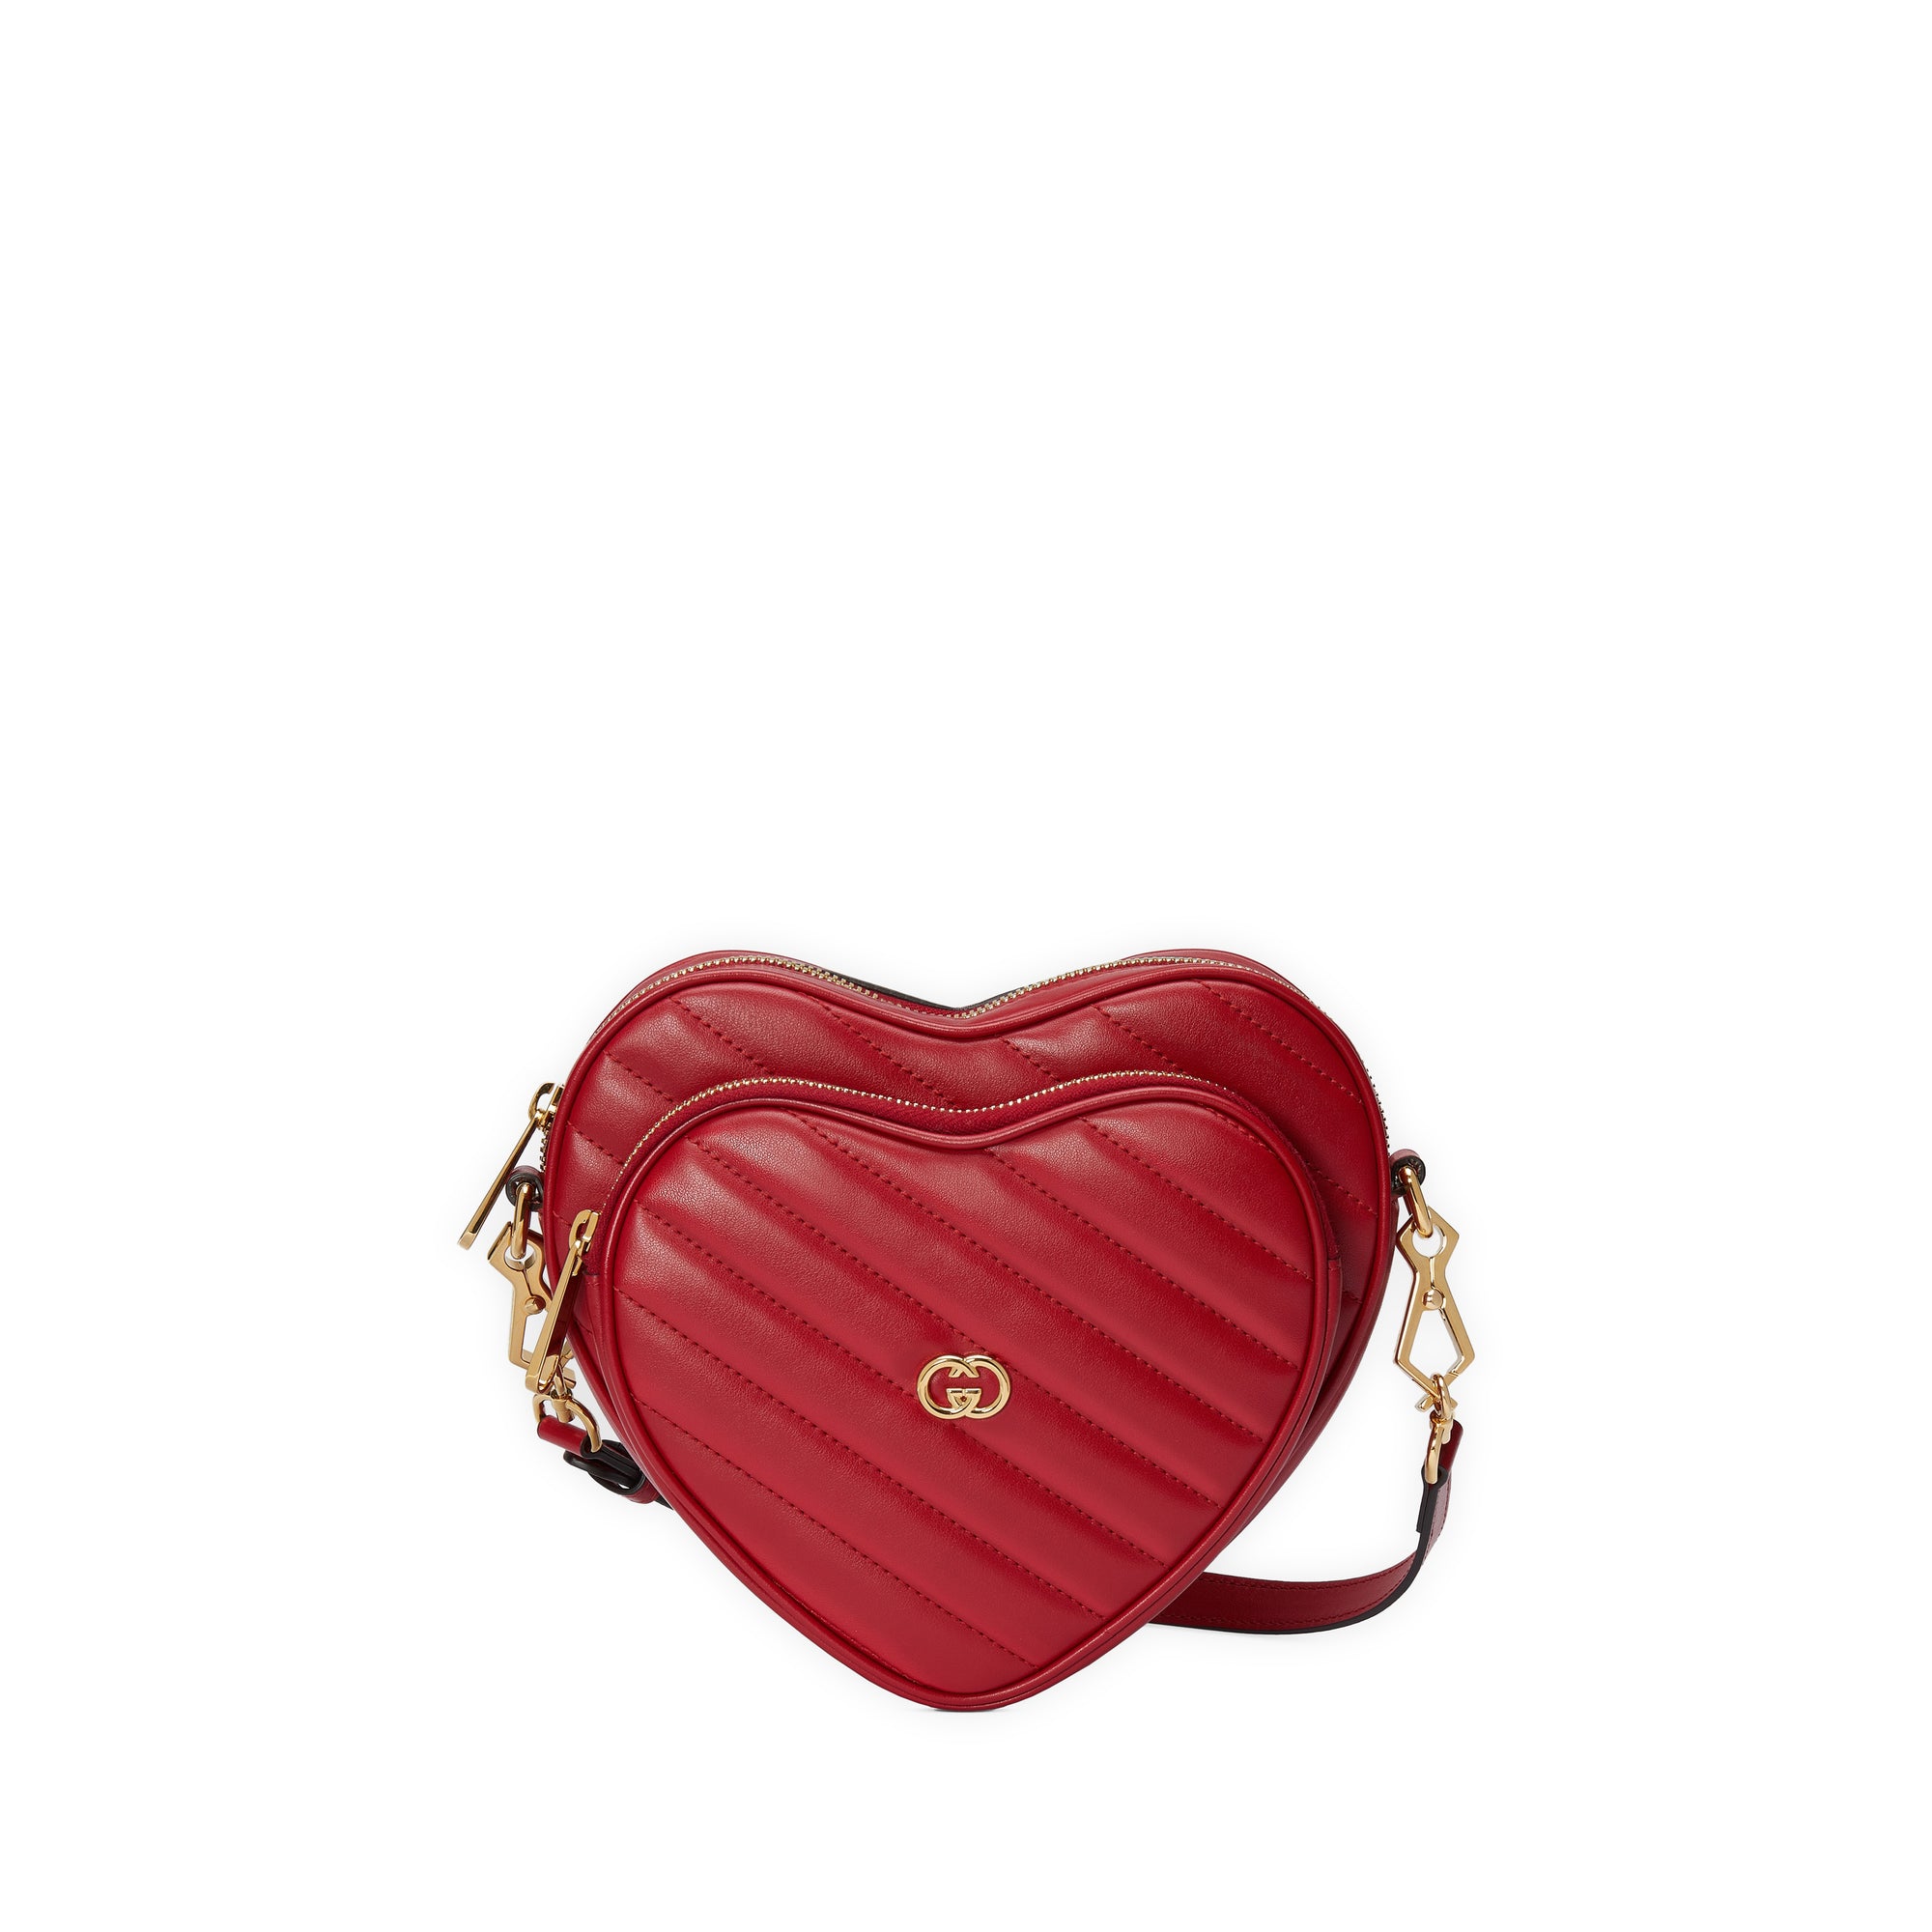 Gucci - Women's Interlocking G Mini Heart Shoulder Bag - (Red) view 1